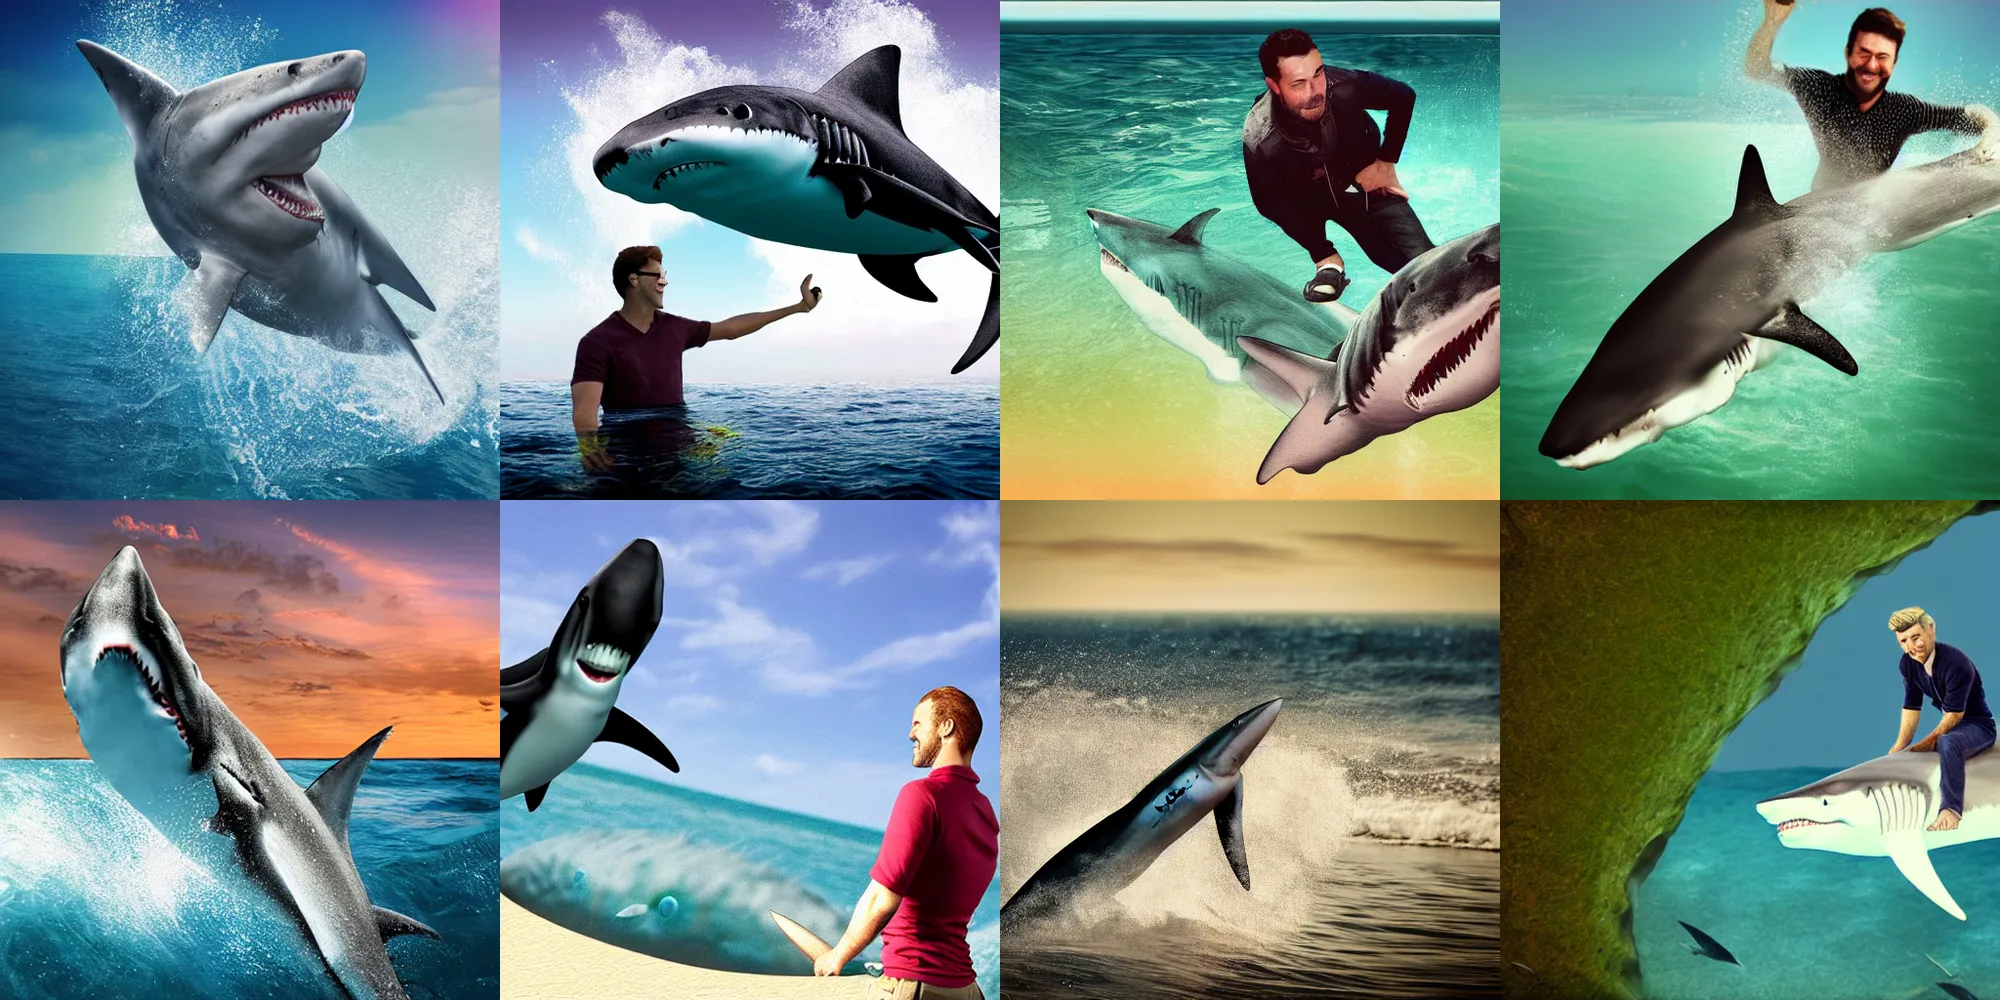 Prompt: Man riding a shark photorealistic photo